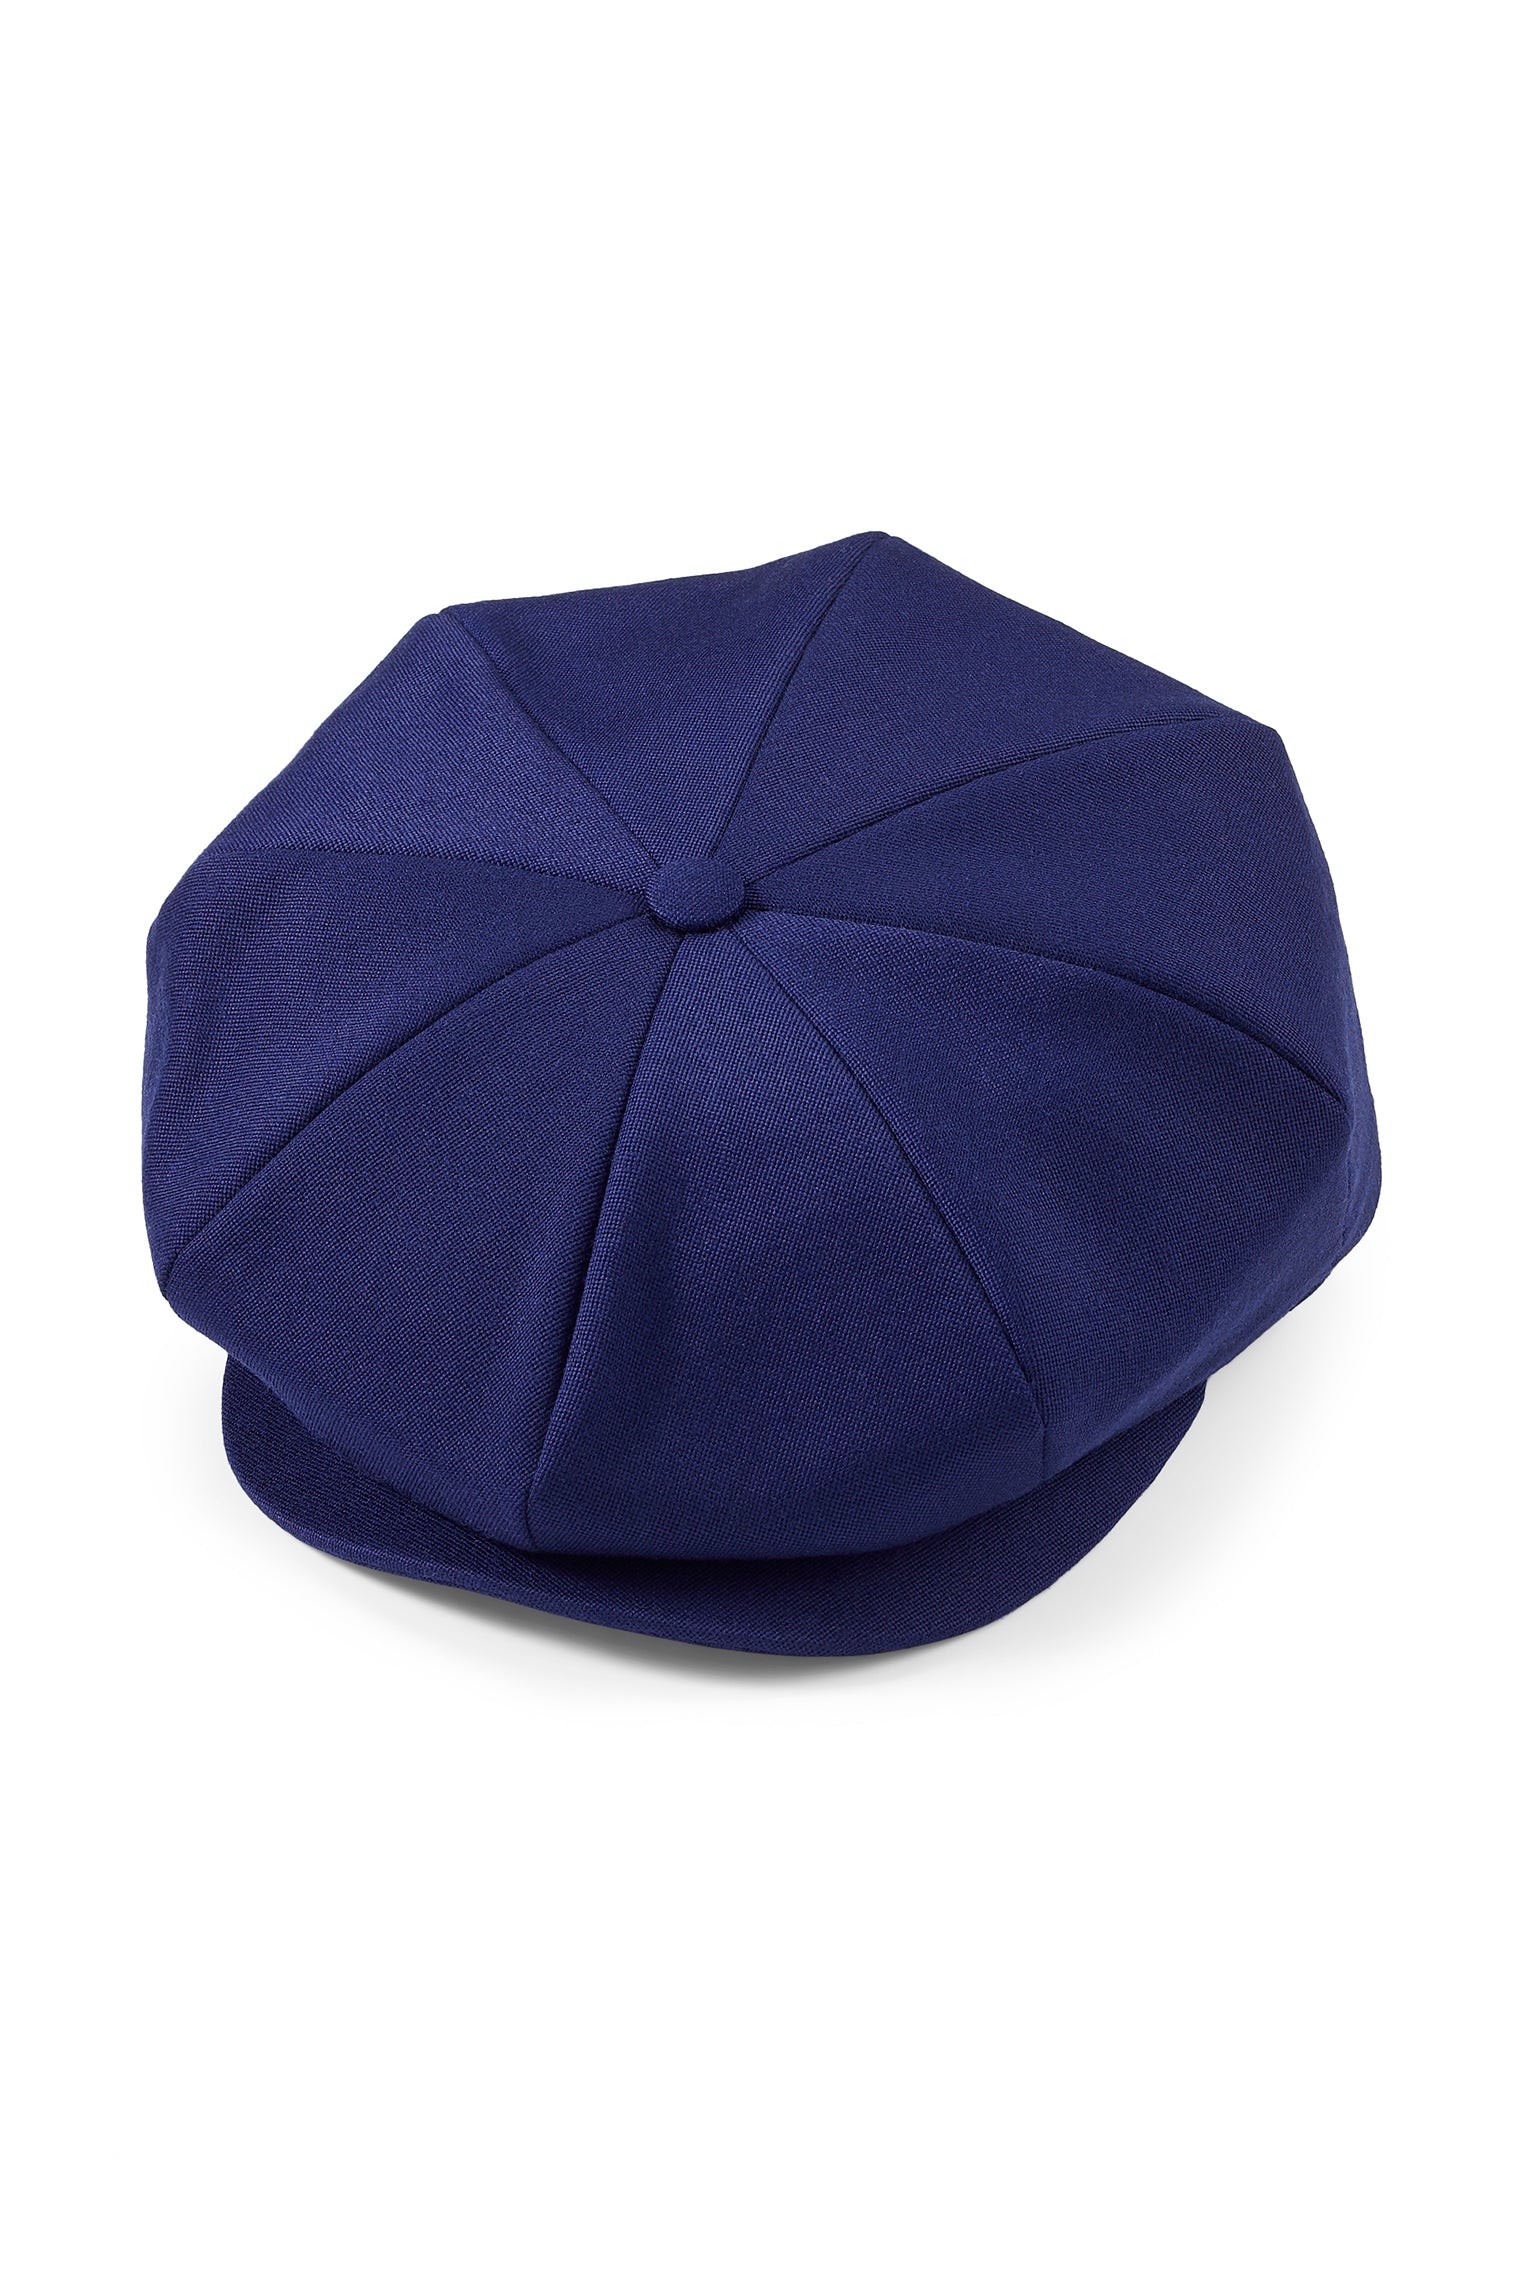 Tremelo Dark Blue Bakerboy Cap - New Season Hat Collection - Lock & Co. Hatters London UK